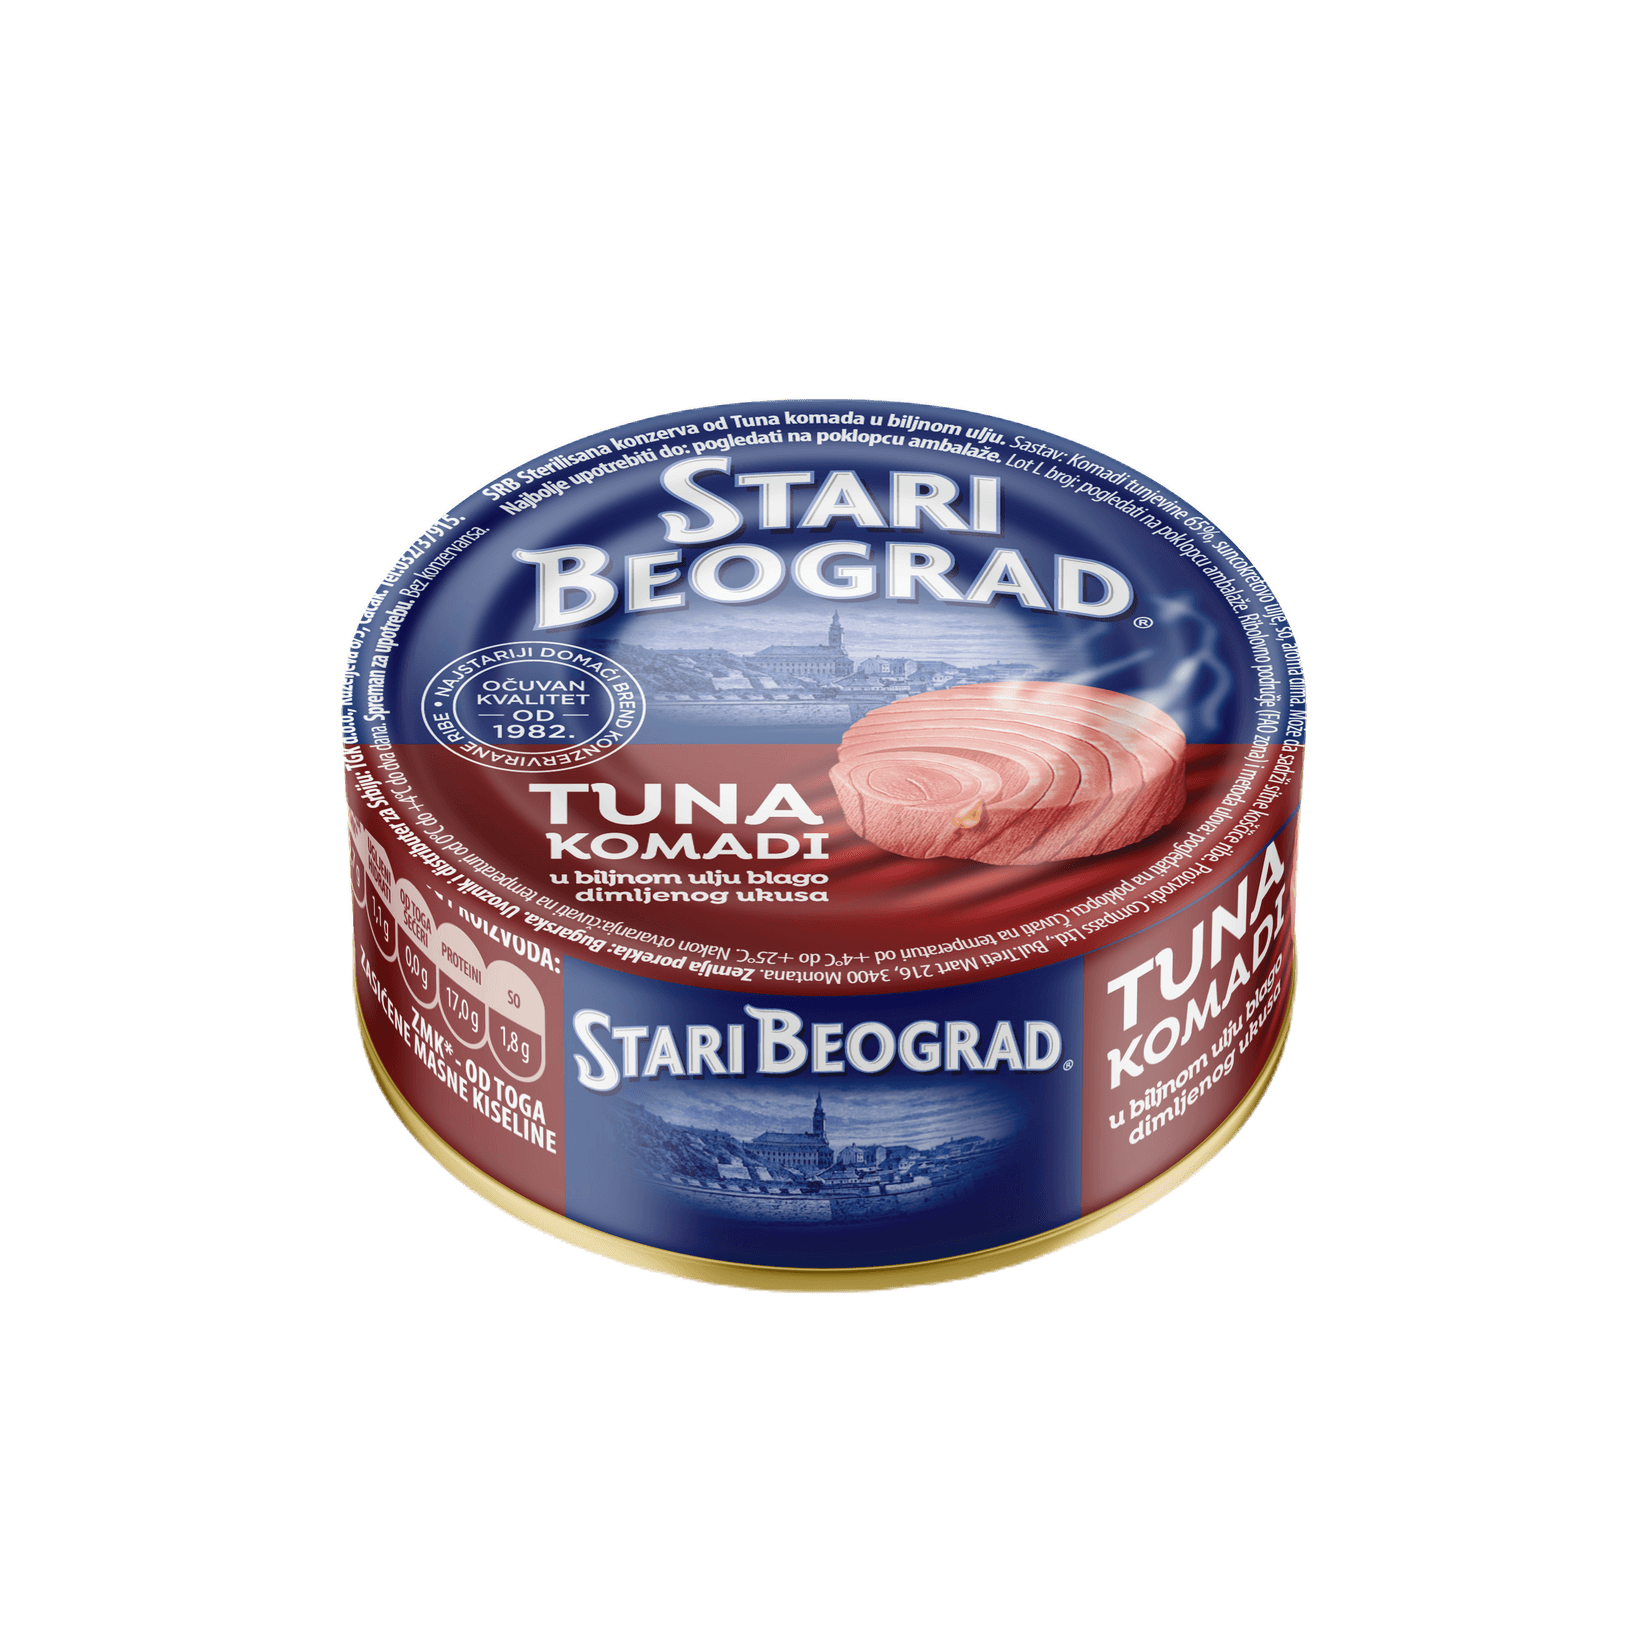 Selected image for STARI BEOGRAD Tuna blago dimljenog ukusa 160g